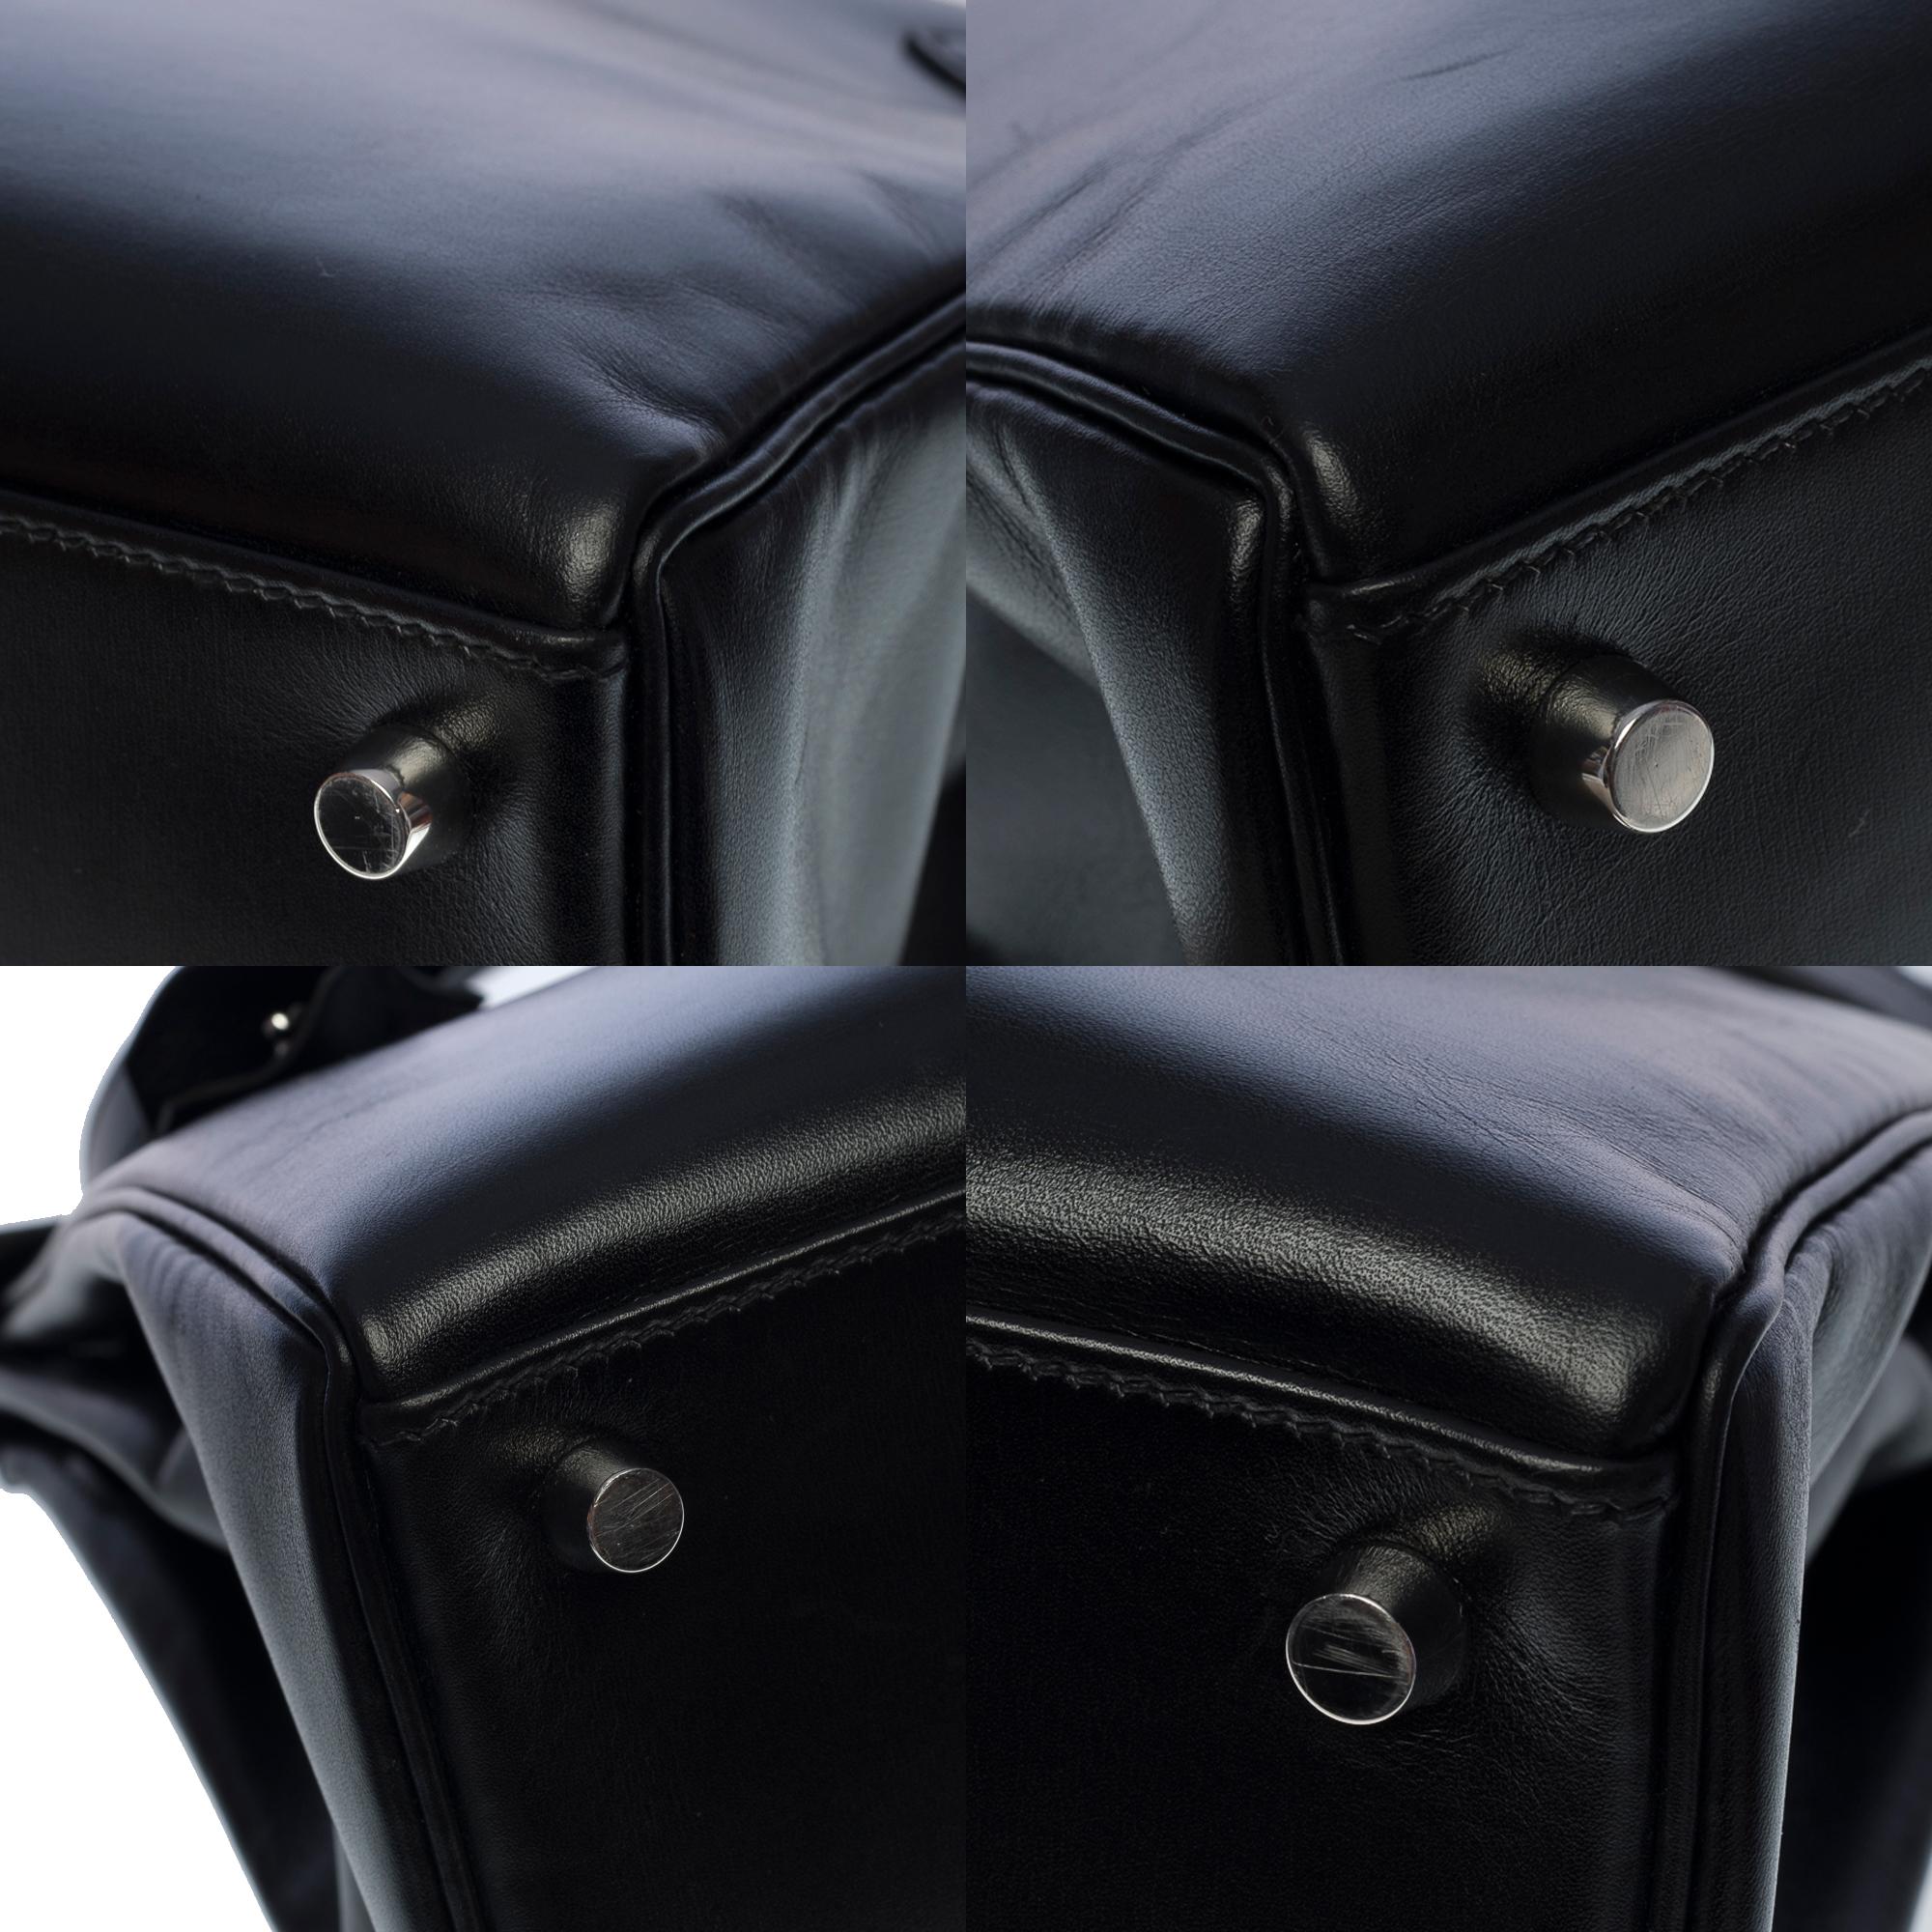 Rare Hermès Kelly 32 retourne handbag strap in black box calf leather, SHW 6